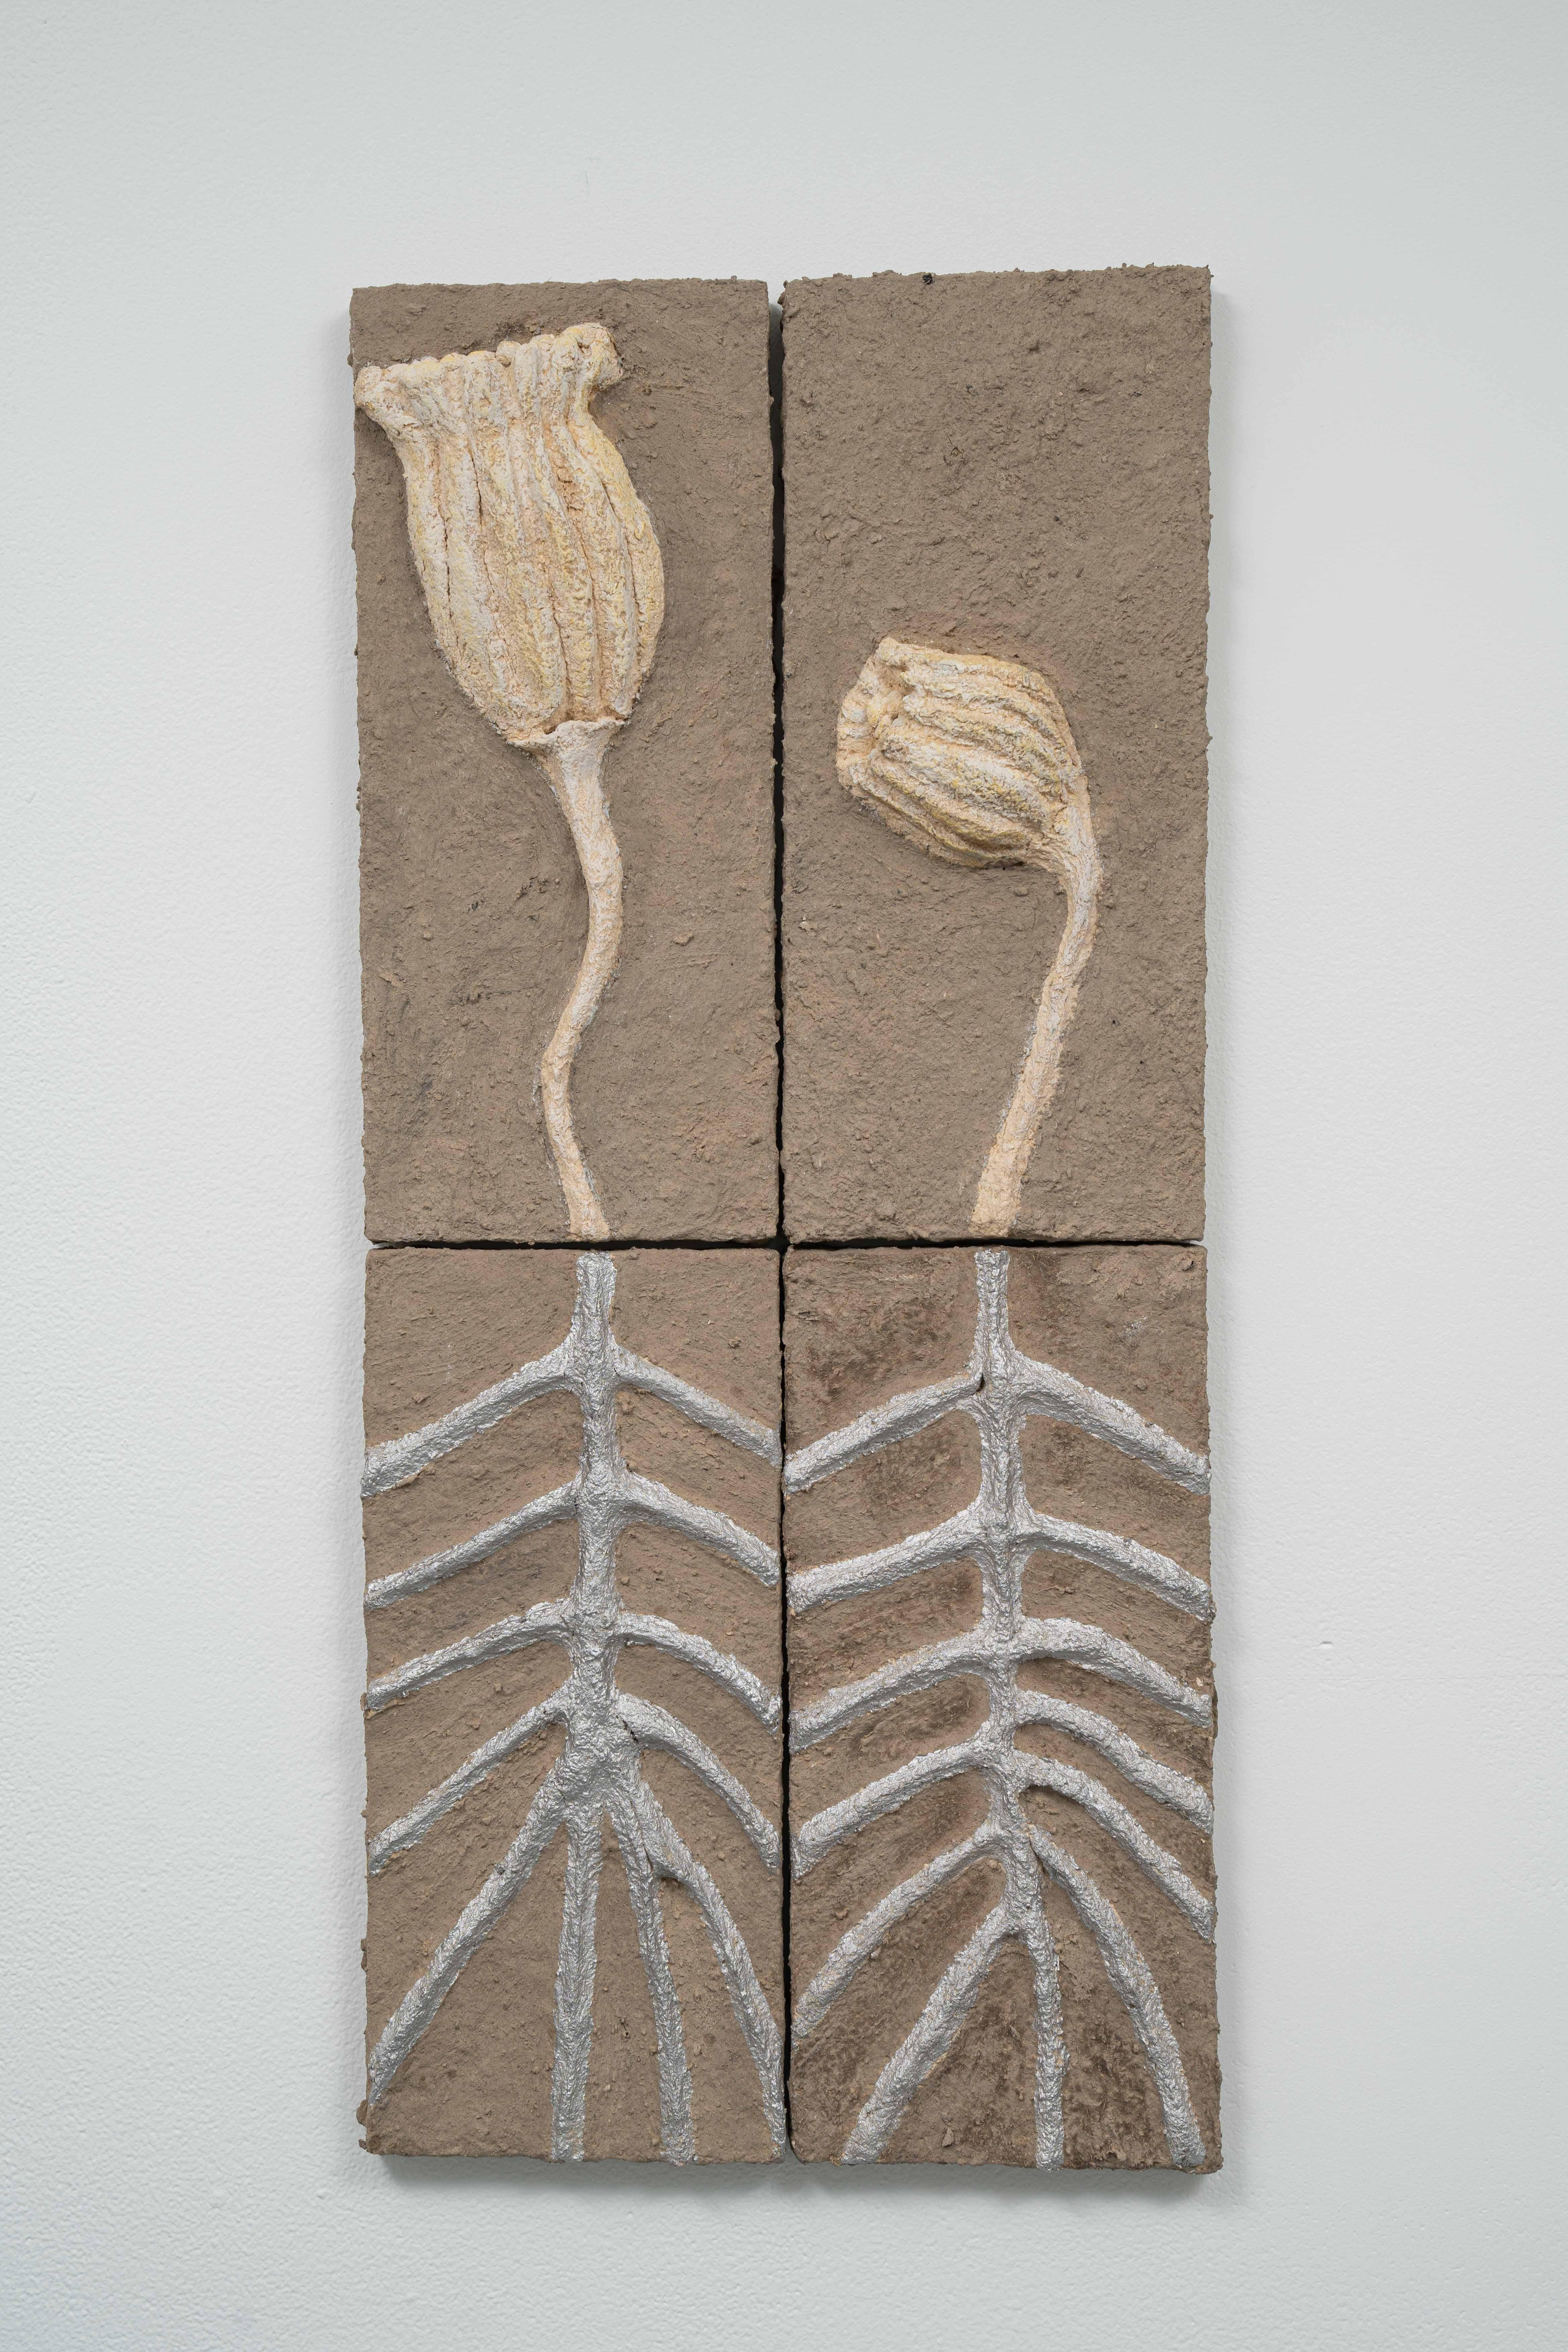 Loren Eiferman Figurative Sculpture - Wood Wall Sculpture: “Talking Roots #2"